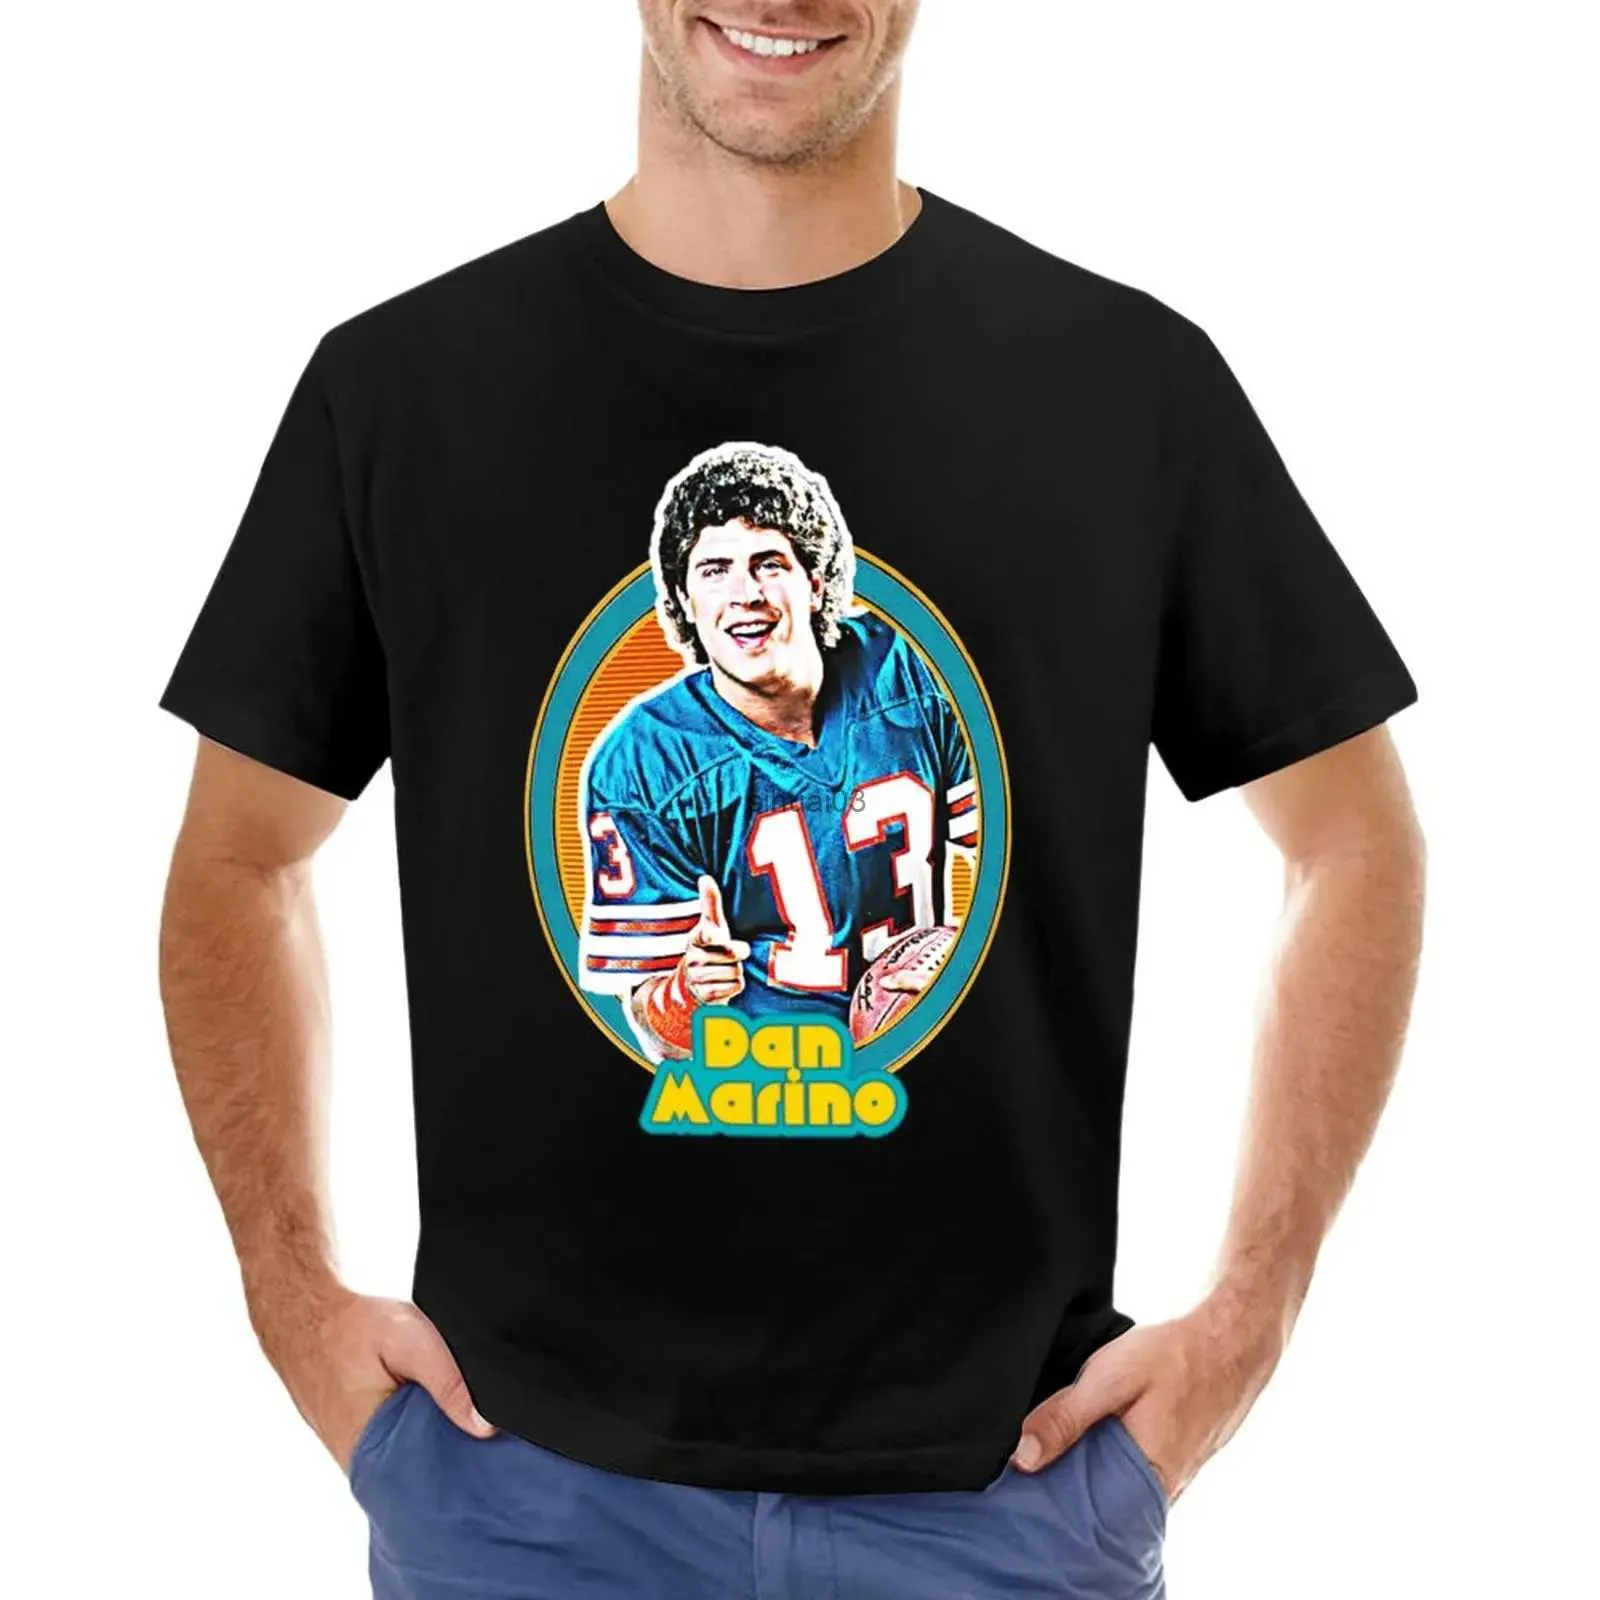 Herren T-Shirts Dan Marino Retro 80er Jahre Fußball T-Shirt Kurzarm T-Shirt Kawaii Kleidung Sommer Kleidung Sommer Top Herren Vintage T-Shirts